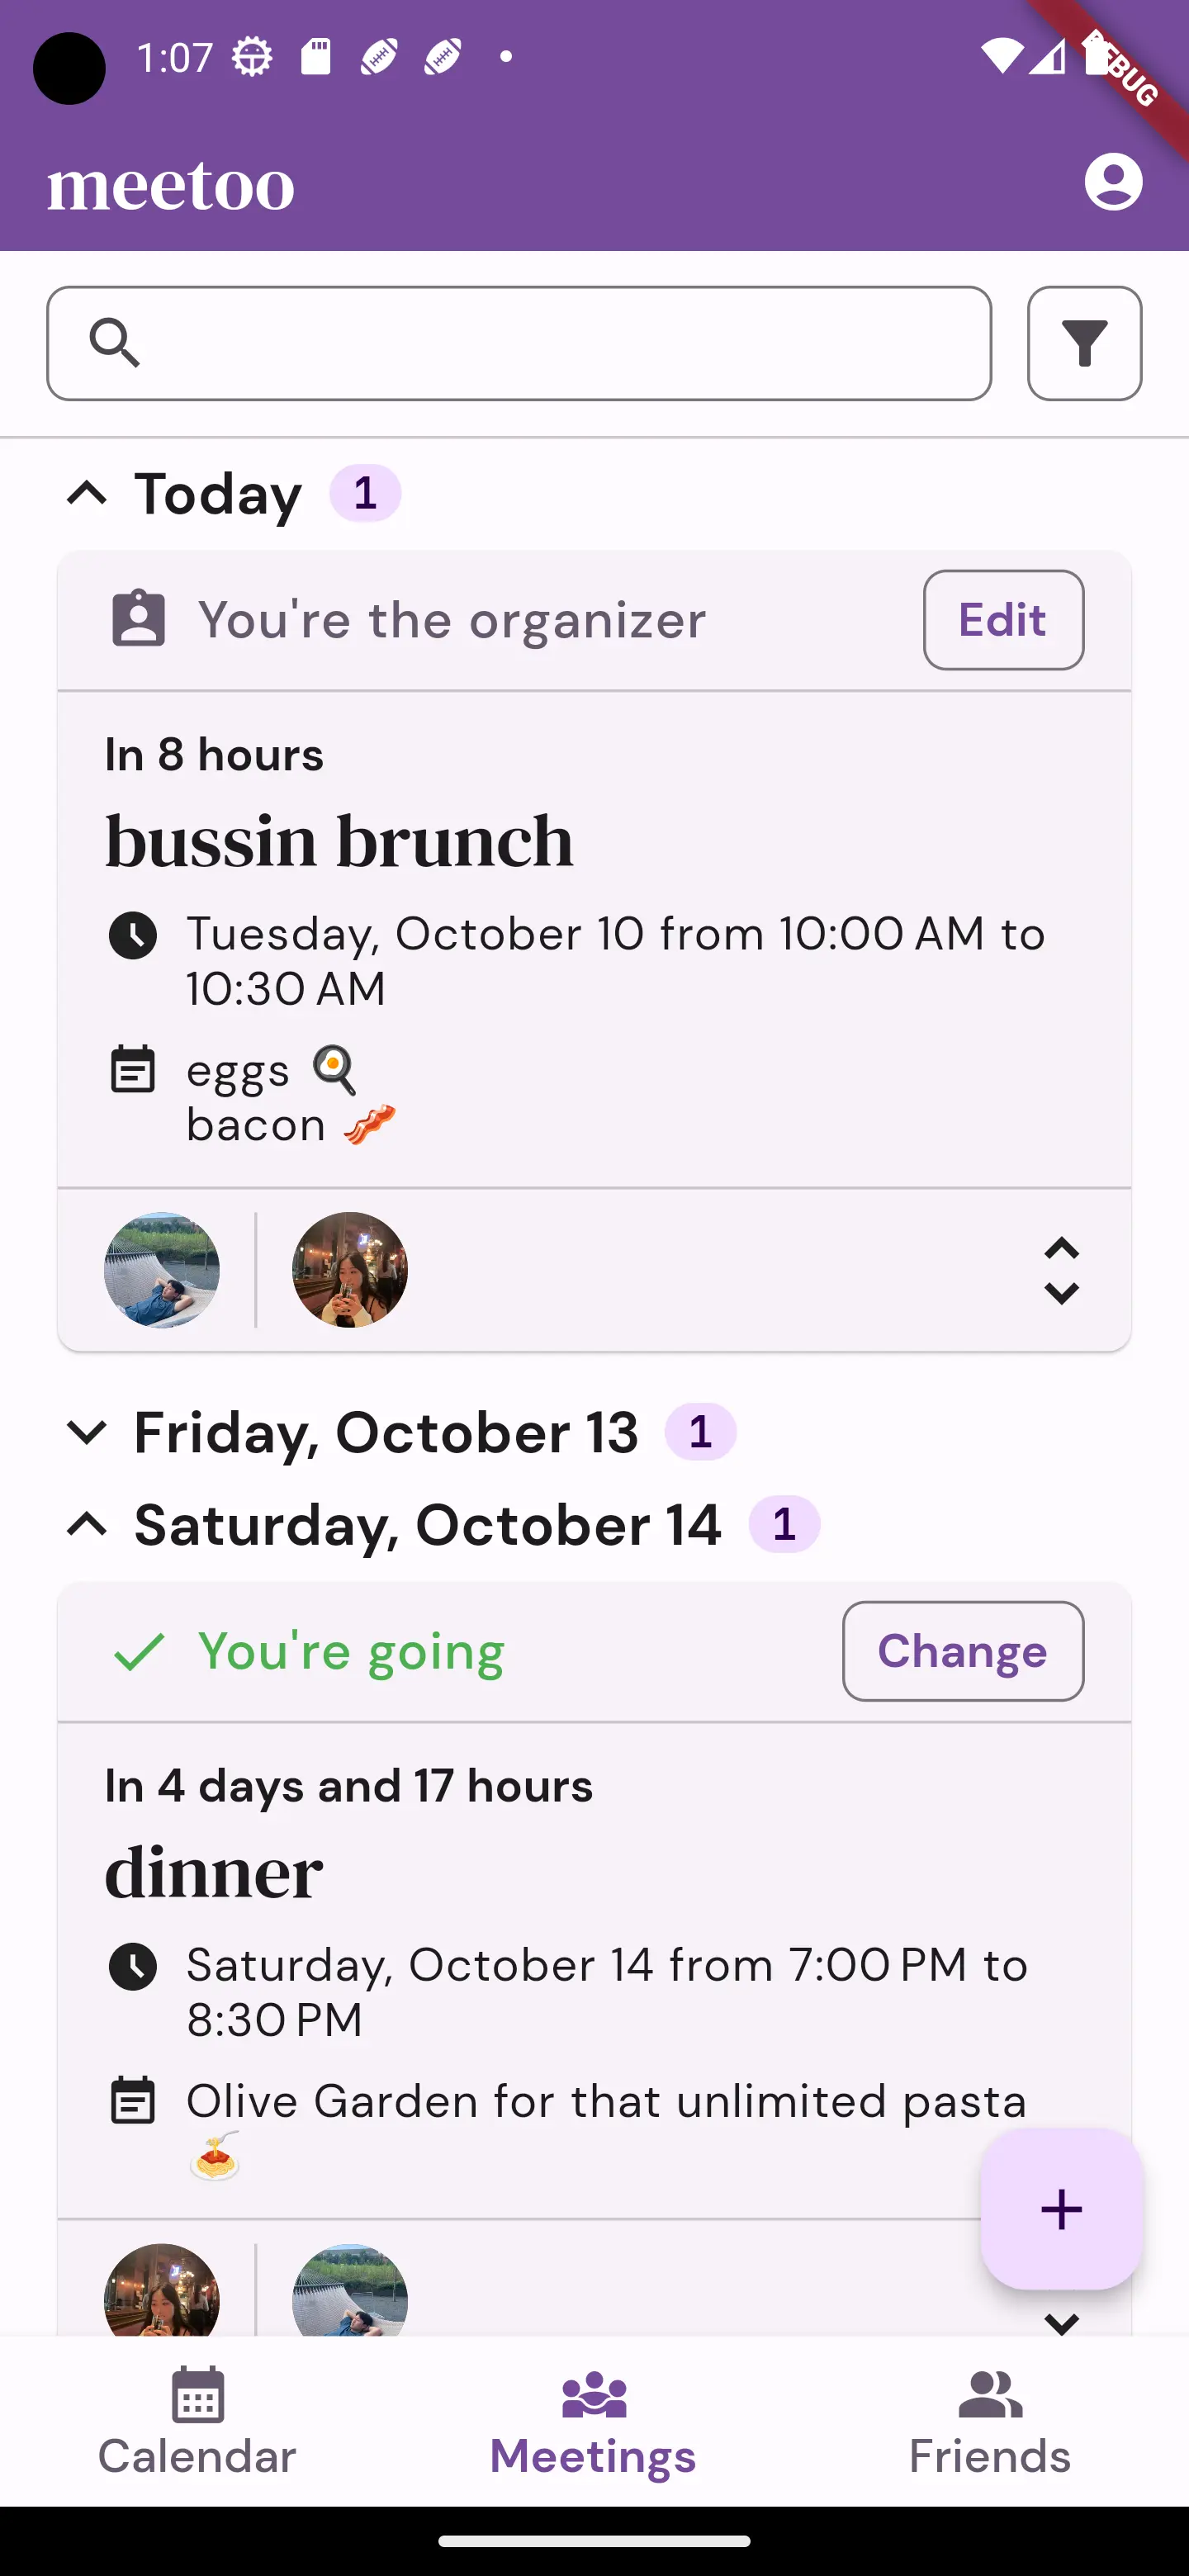 A screenshot of the meetoo meeting timeline on the home screen